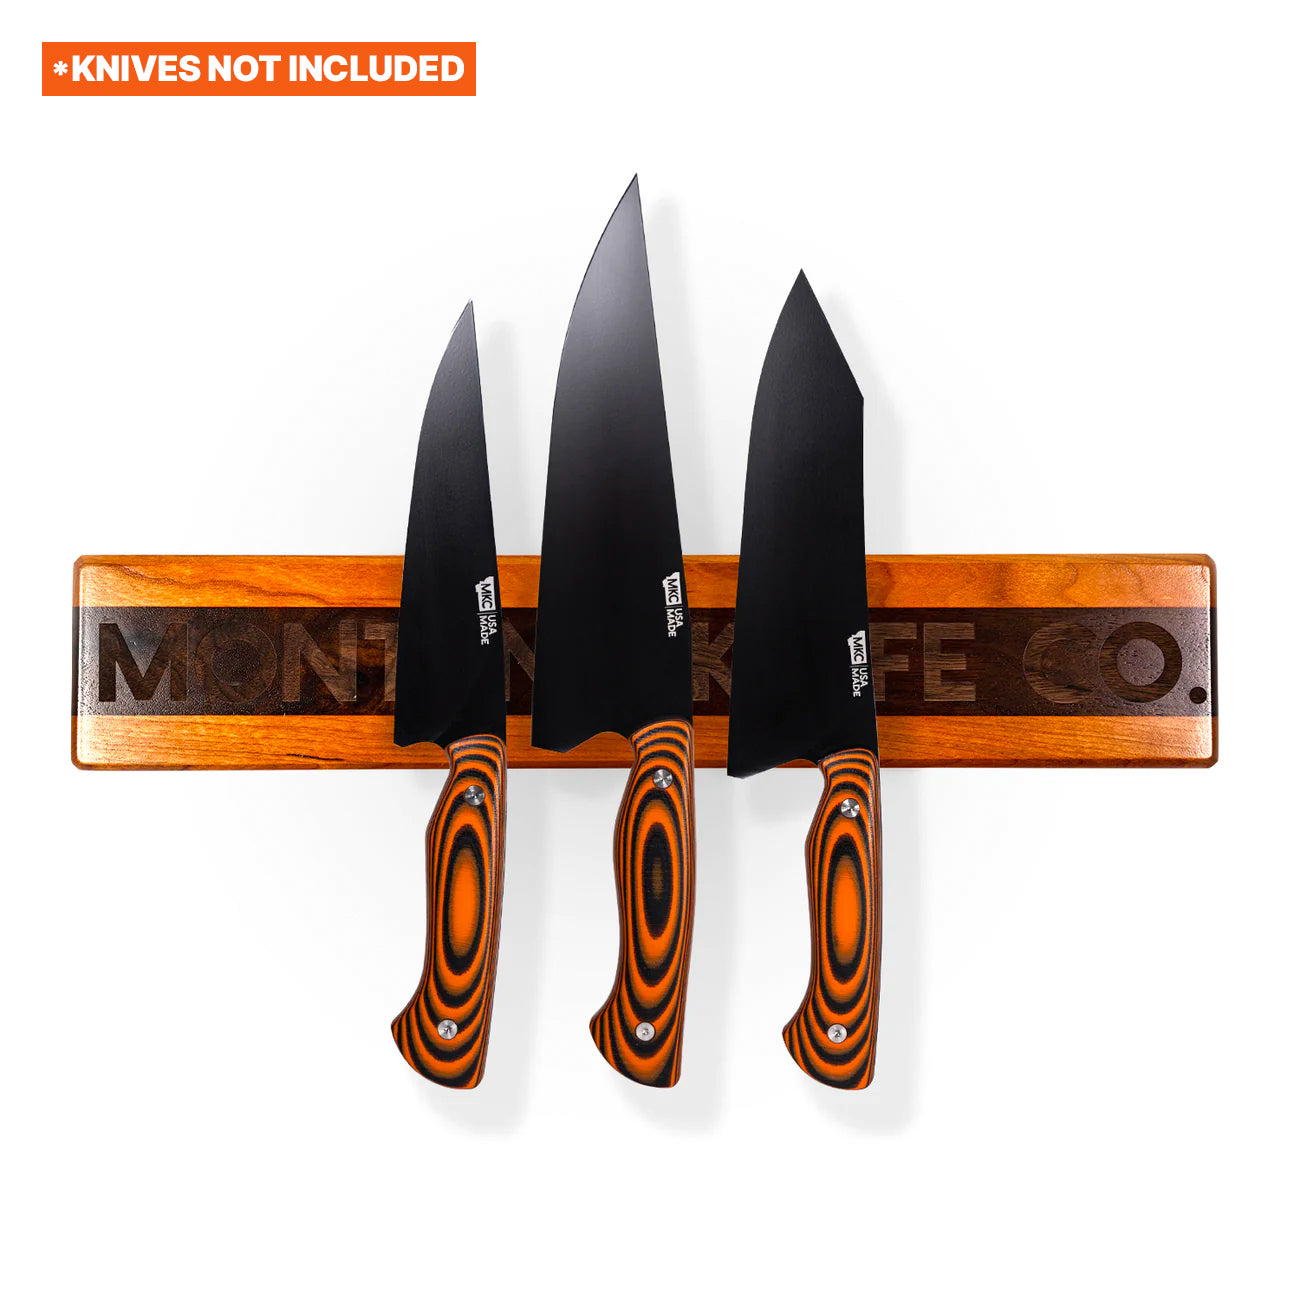 LIMITED EDITION MKC CULINARY KNIFE HANG - DARK WOOD FINISH